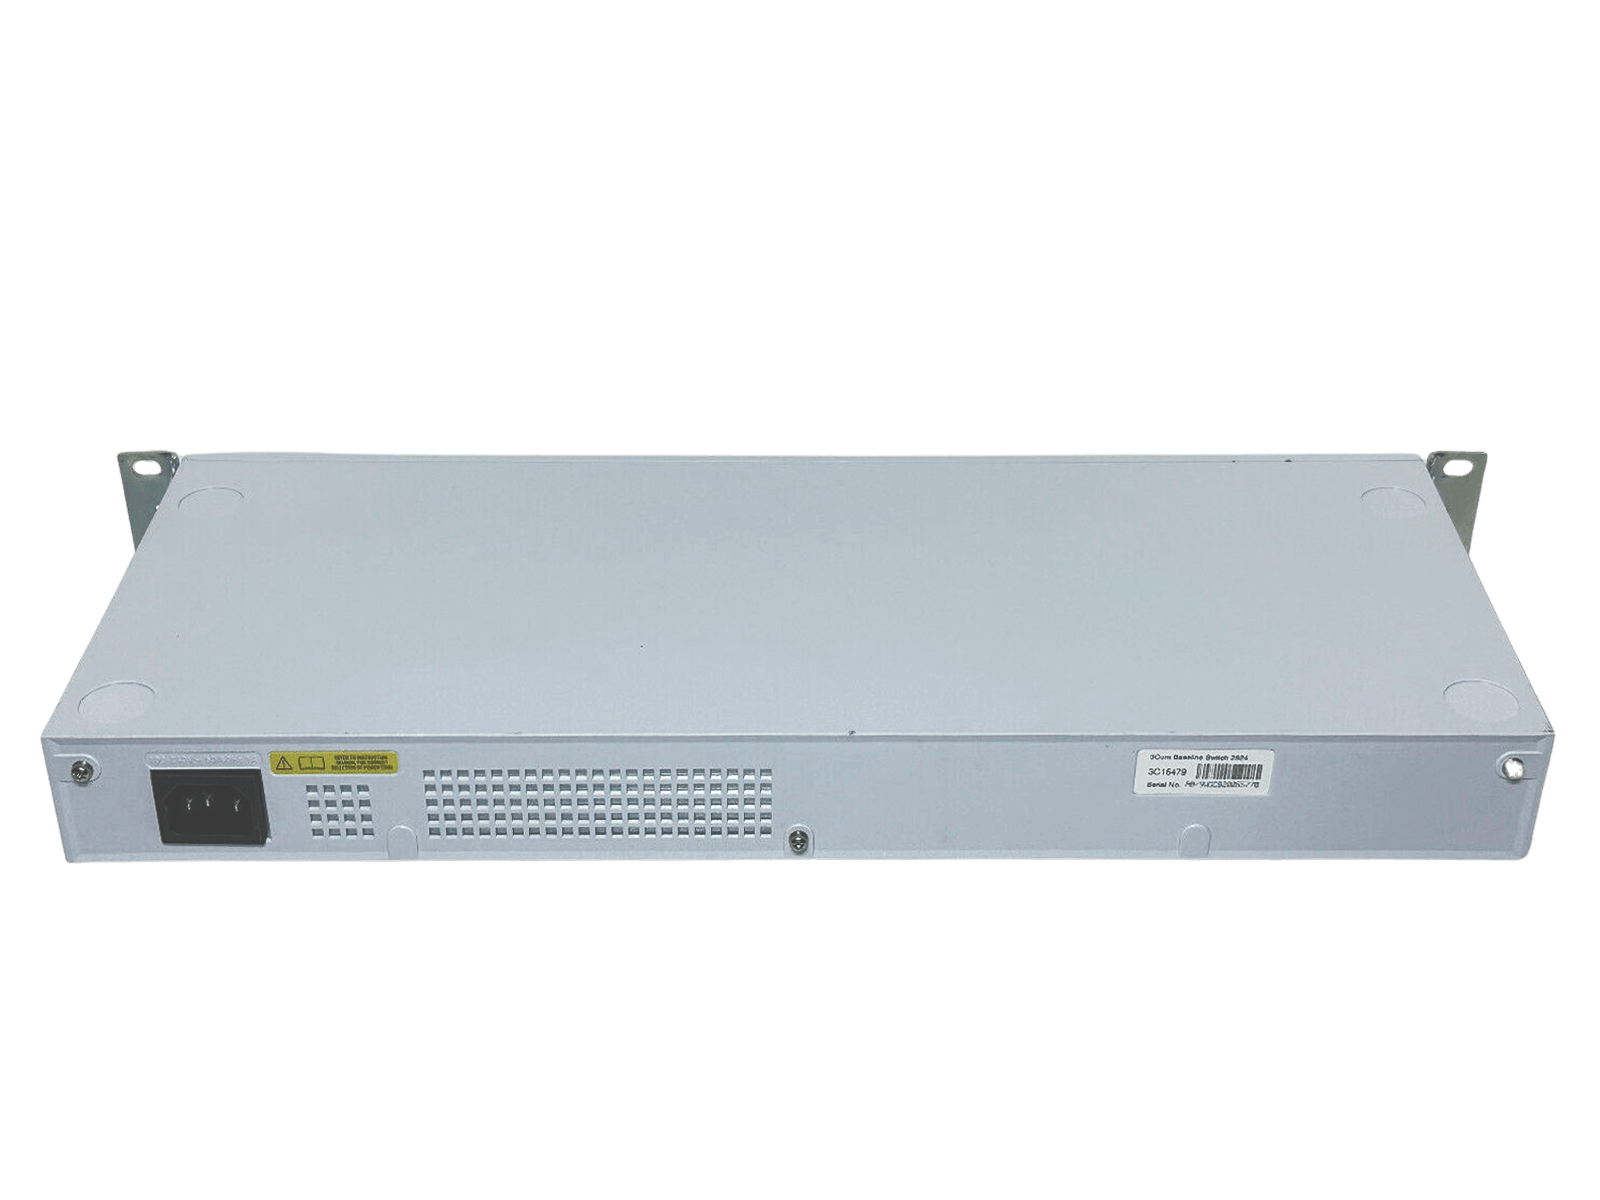 3Com Baseline Switch 2824 24x RJ-45 10/100/1000Mbps Gigabit Ethernet Ports Ears 3C16479.